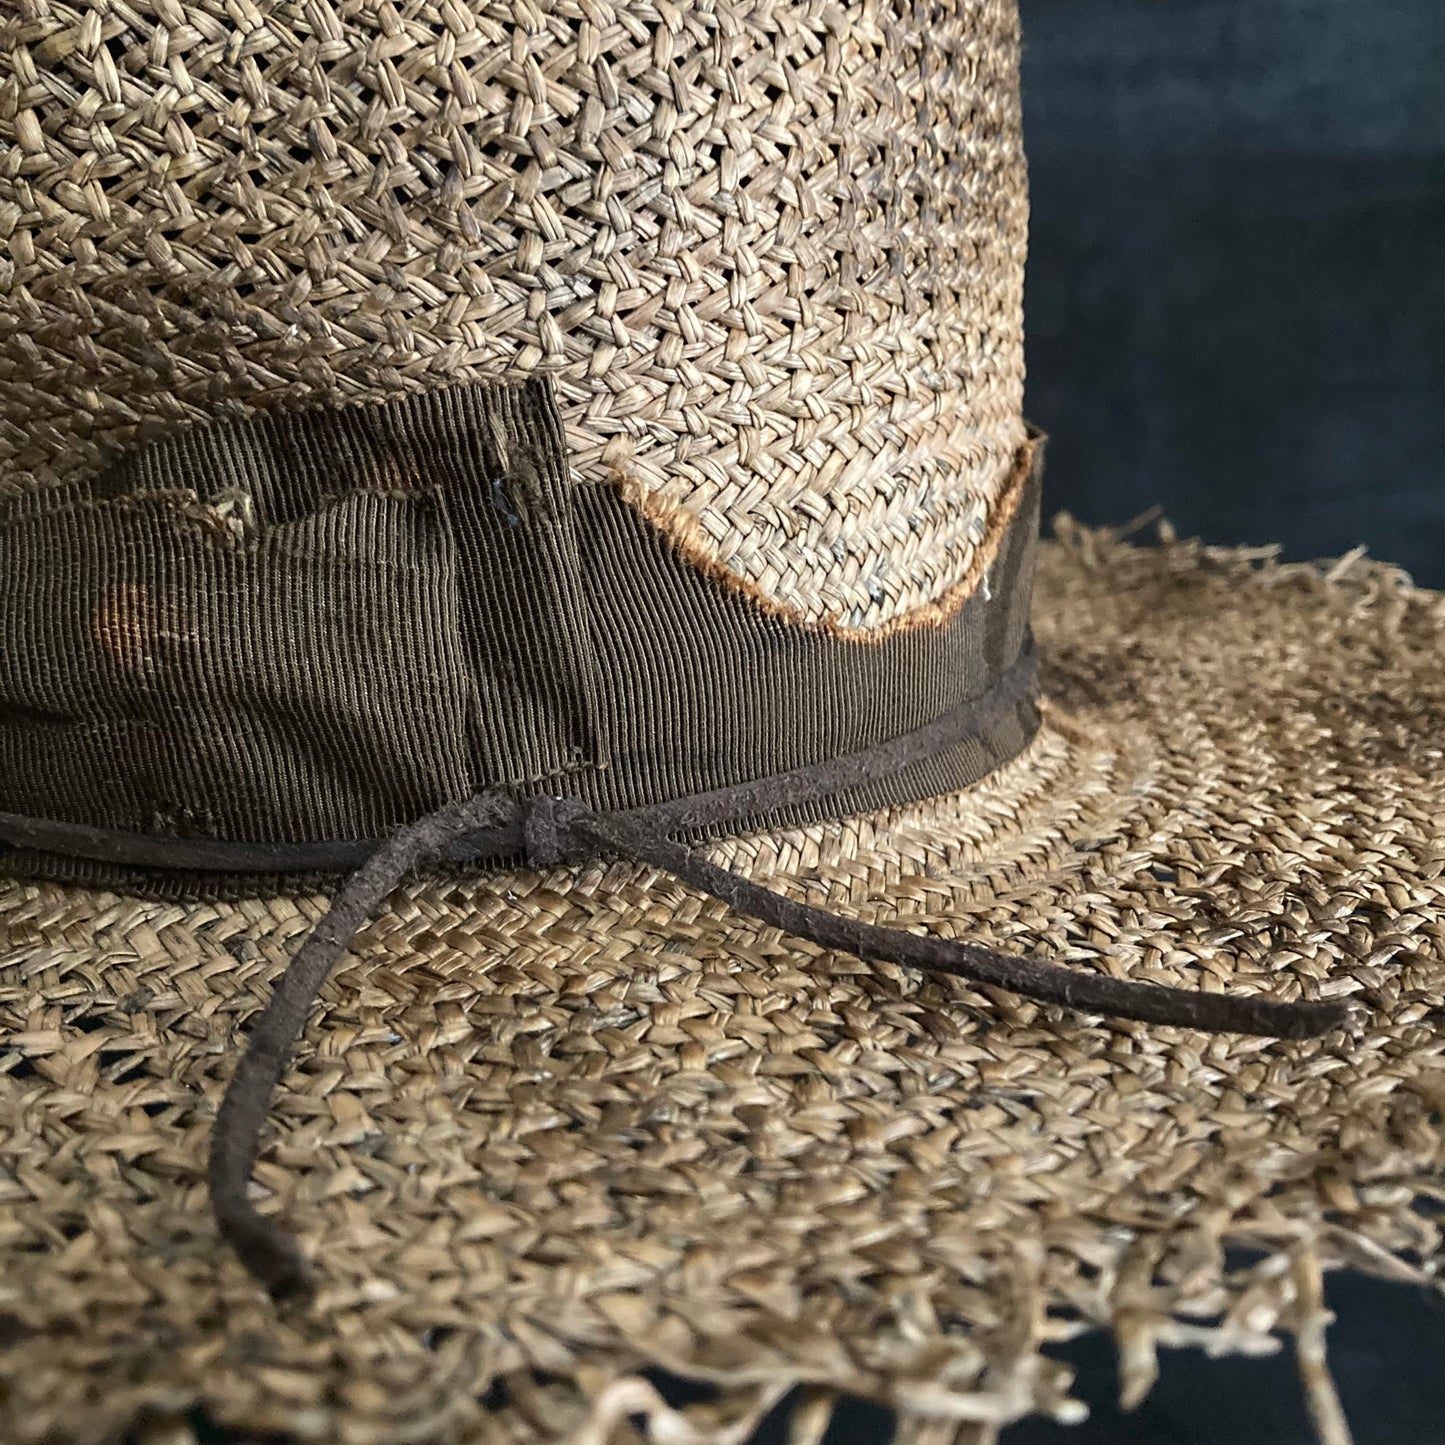 Soil brown khaki fedora hat